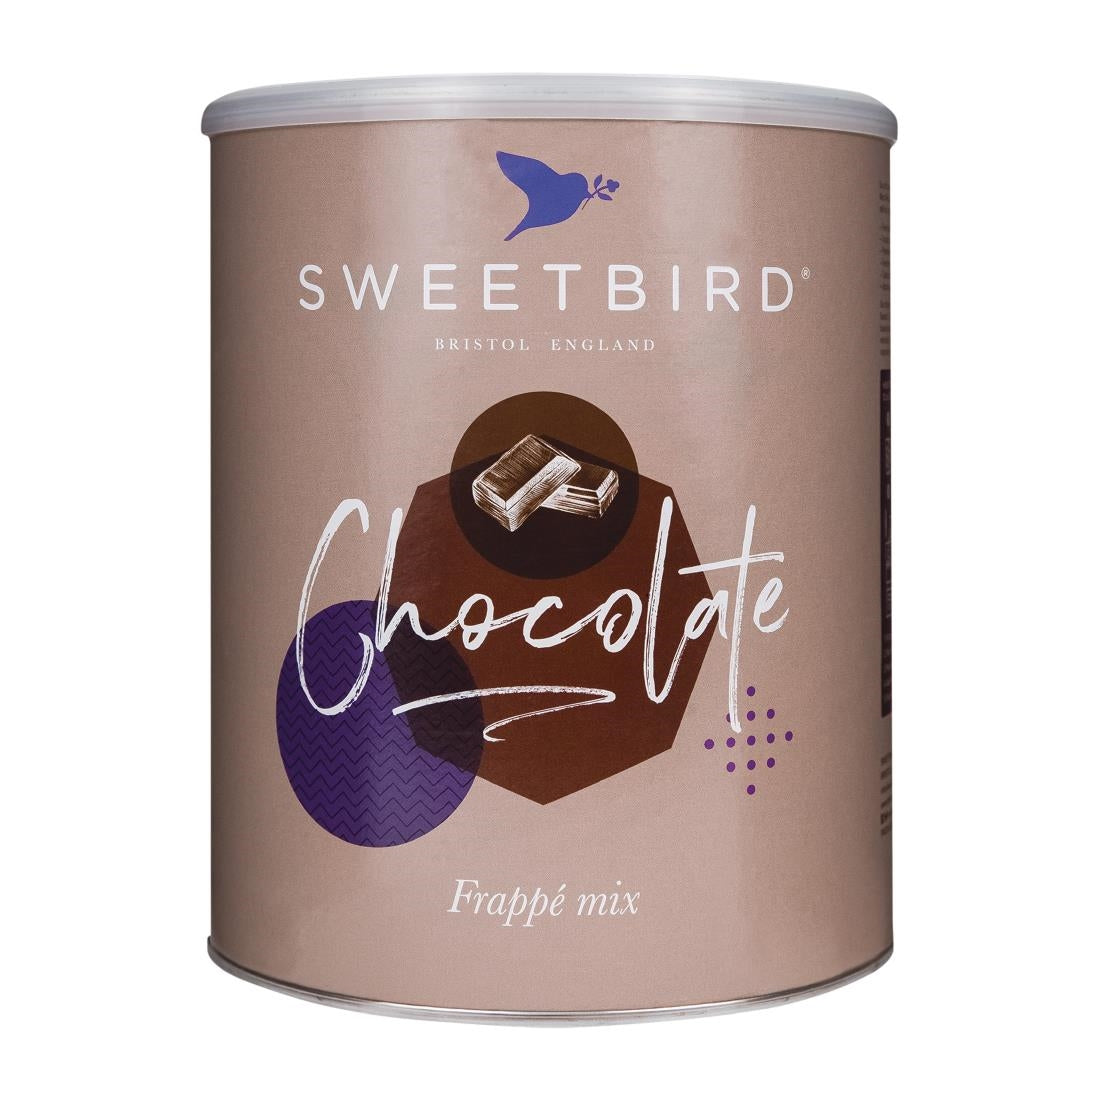 DX596 Sweetbird Chocolate FrappÃ© Mix 2kg Tin